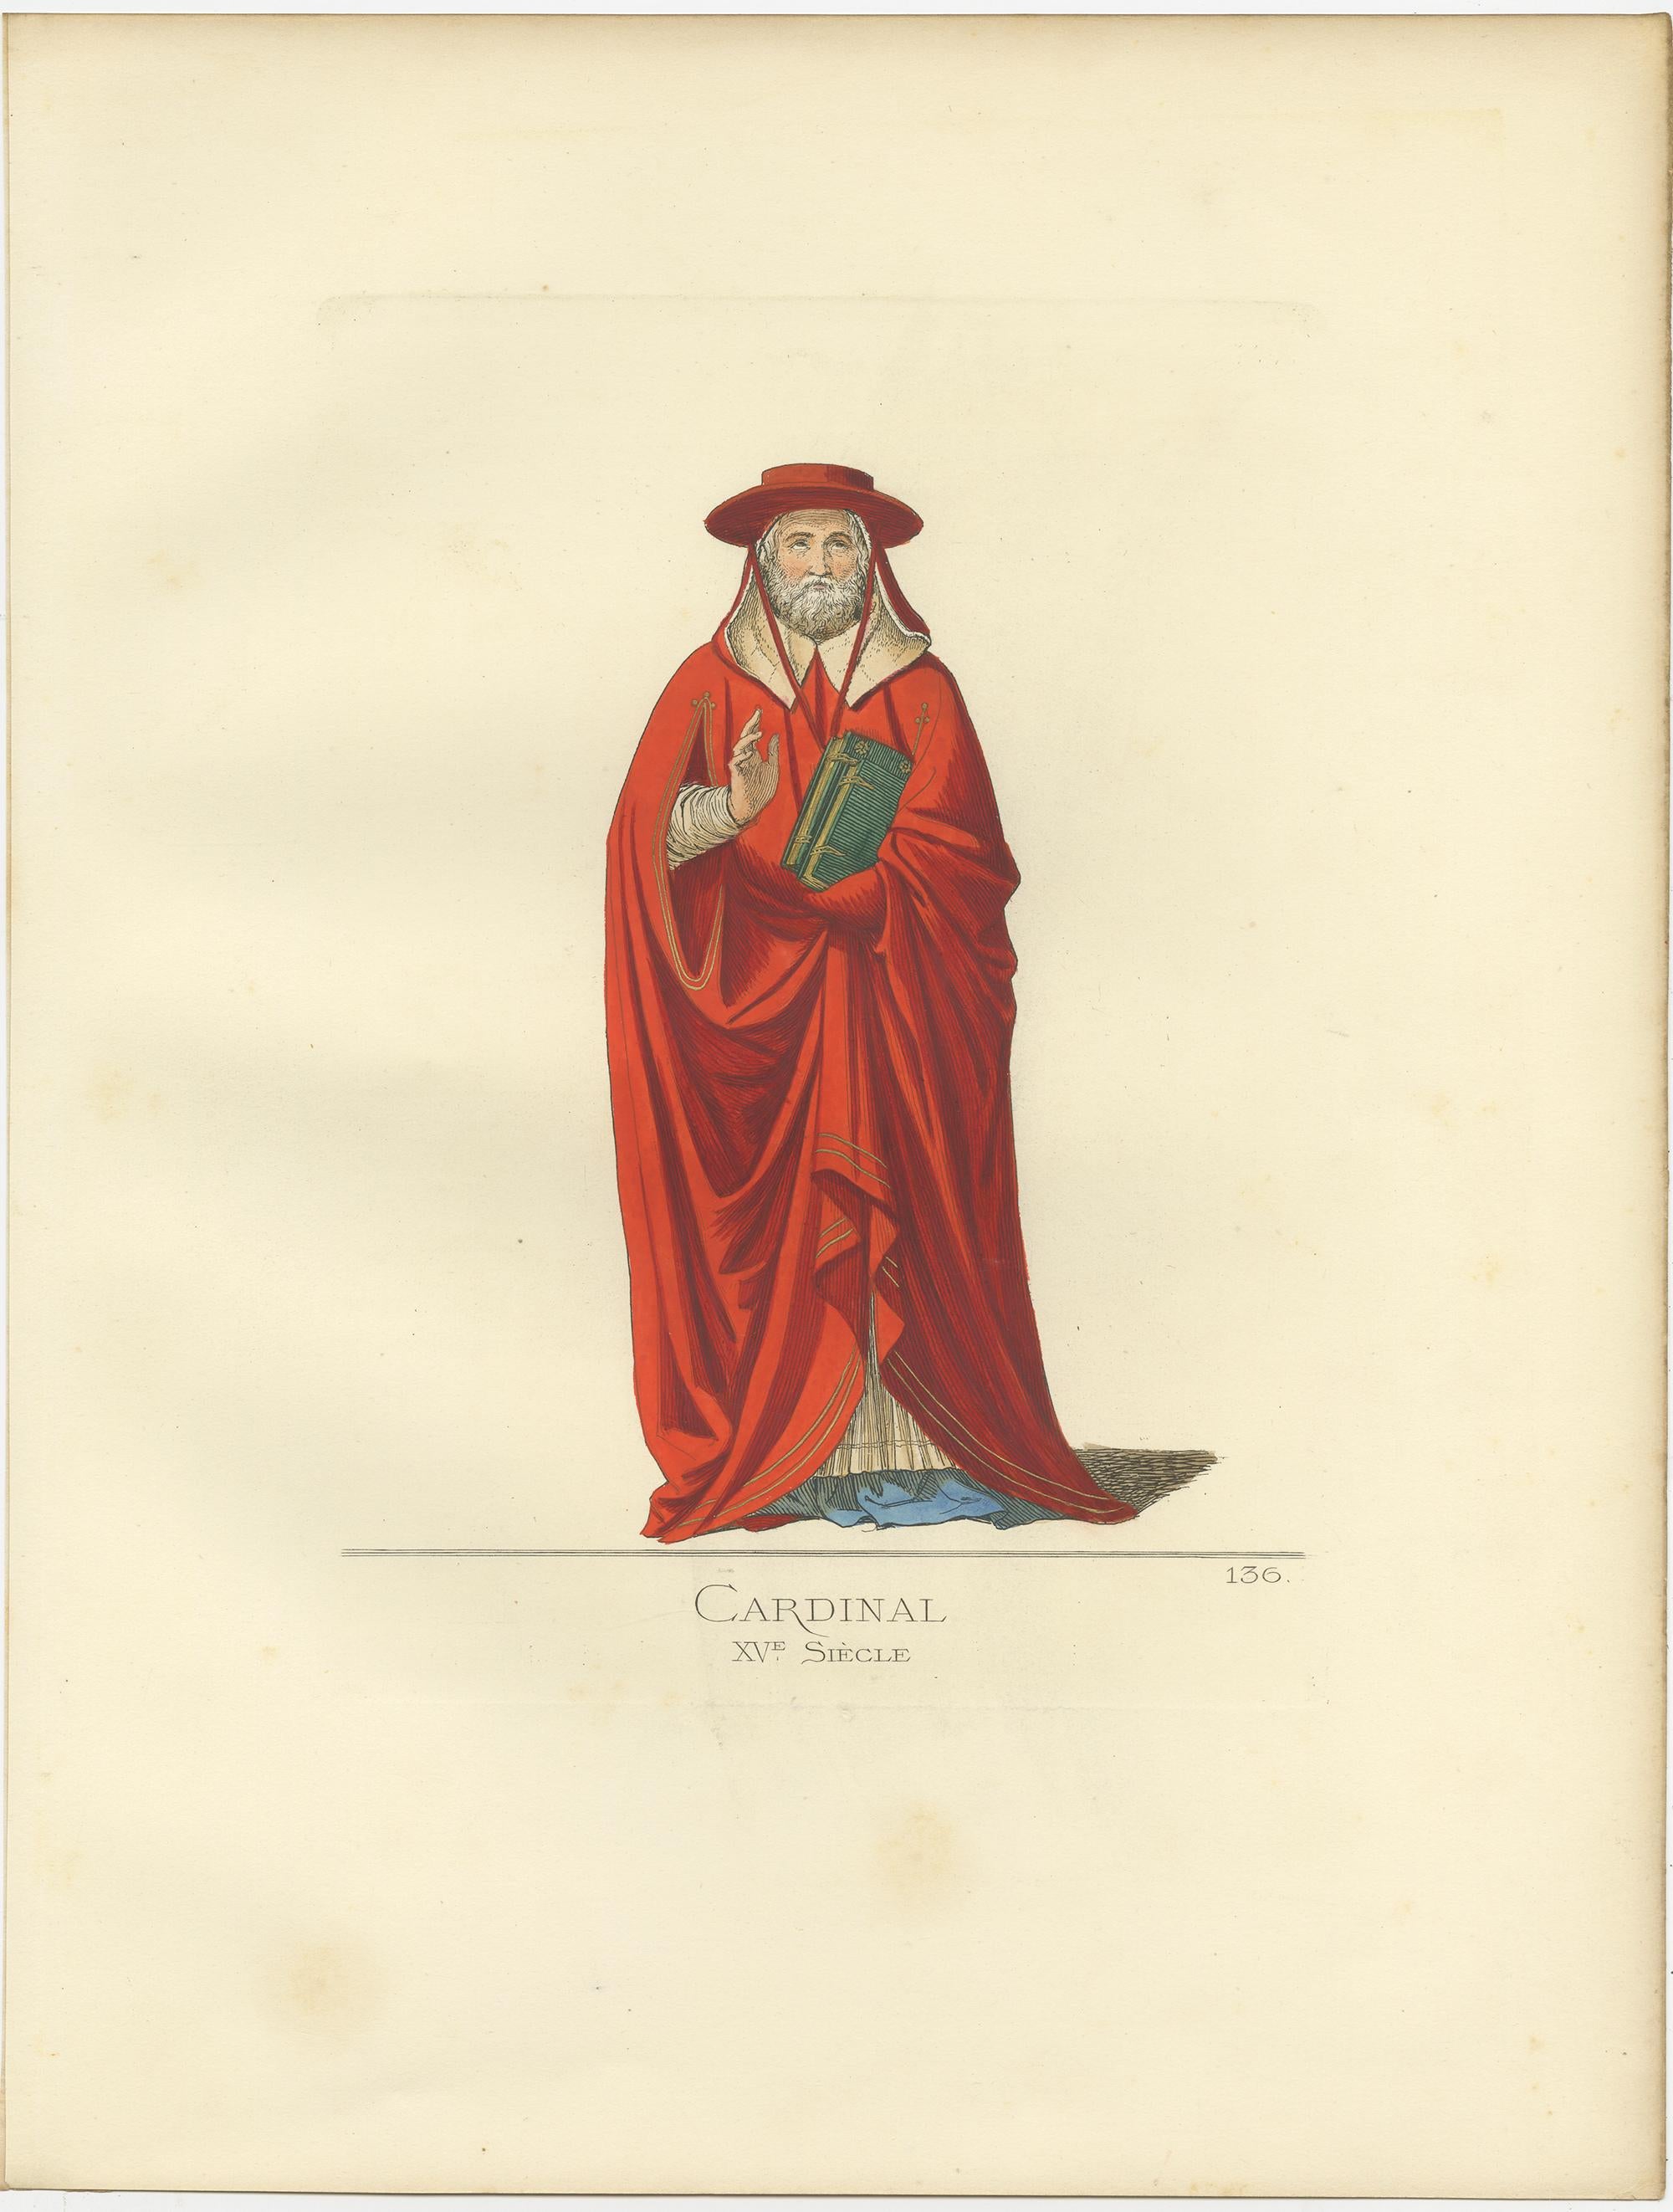 Paper Antique Print of a Cardinal, 15th Century, by Bonnard, 1860